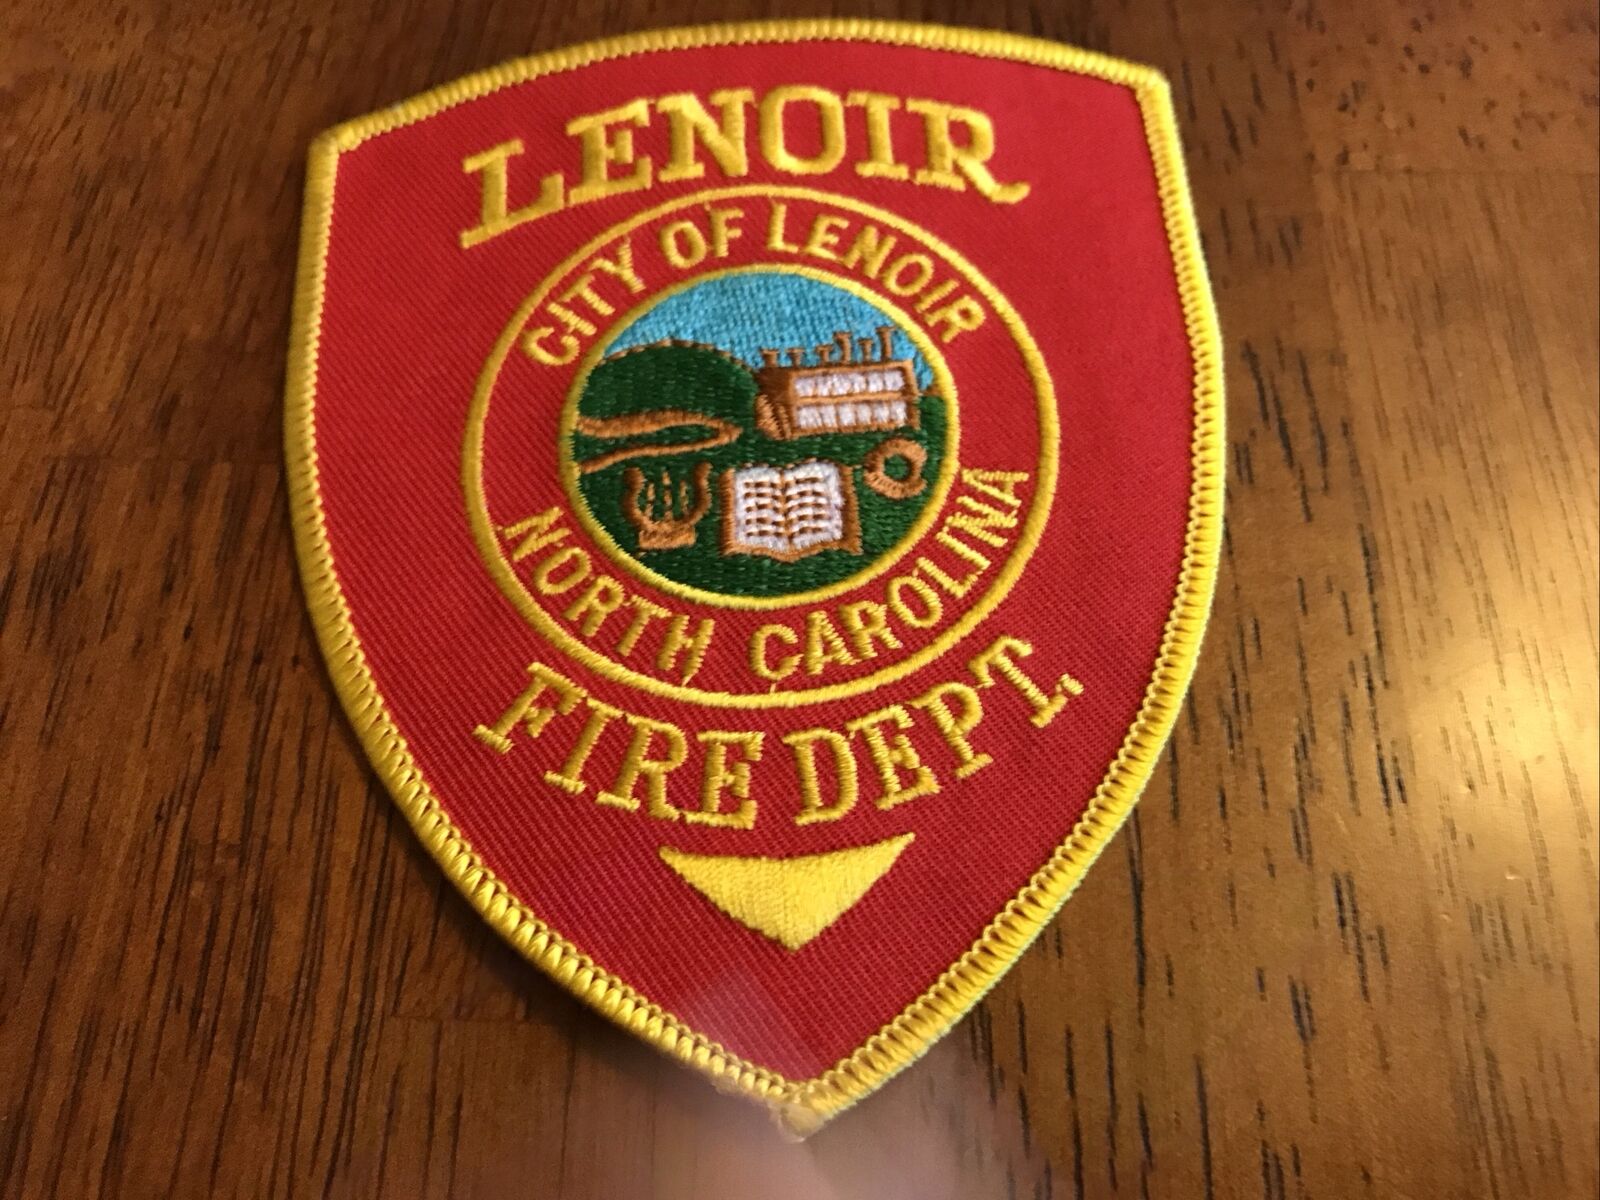 Lenoir  Fire Department City Of Lenoir  North Carolina Patch/Badge